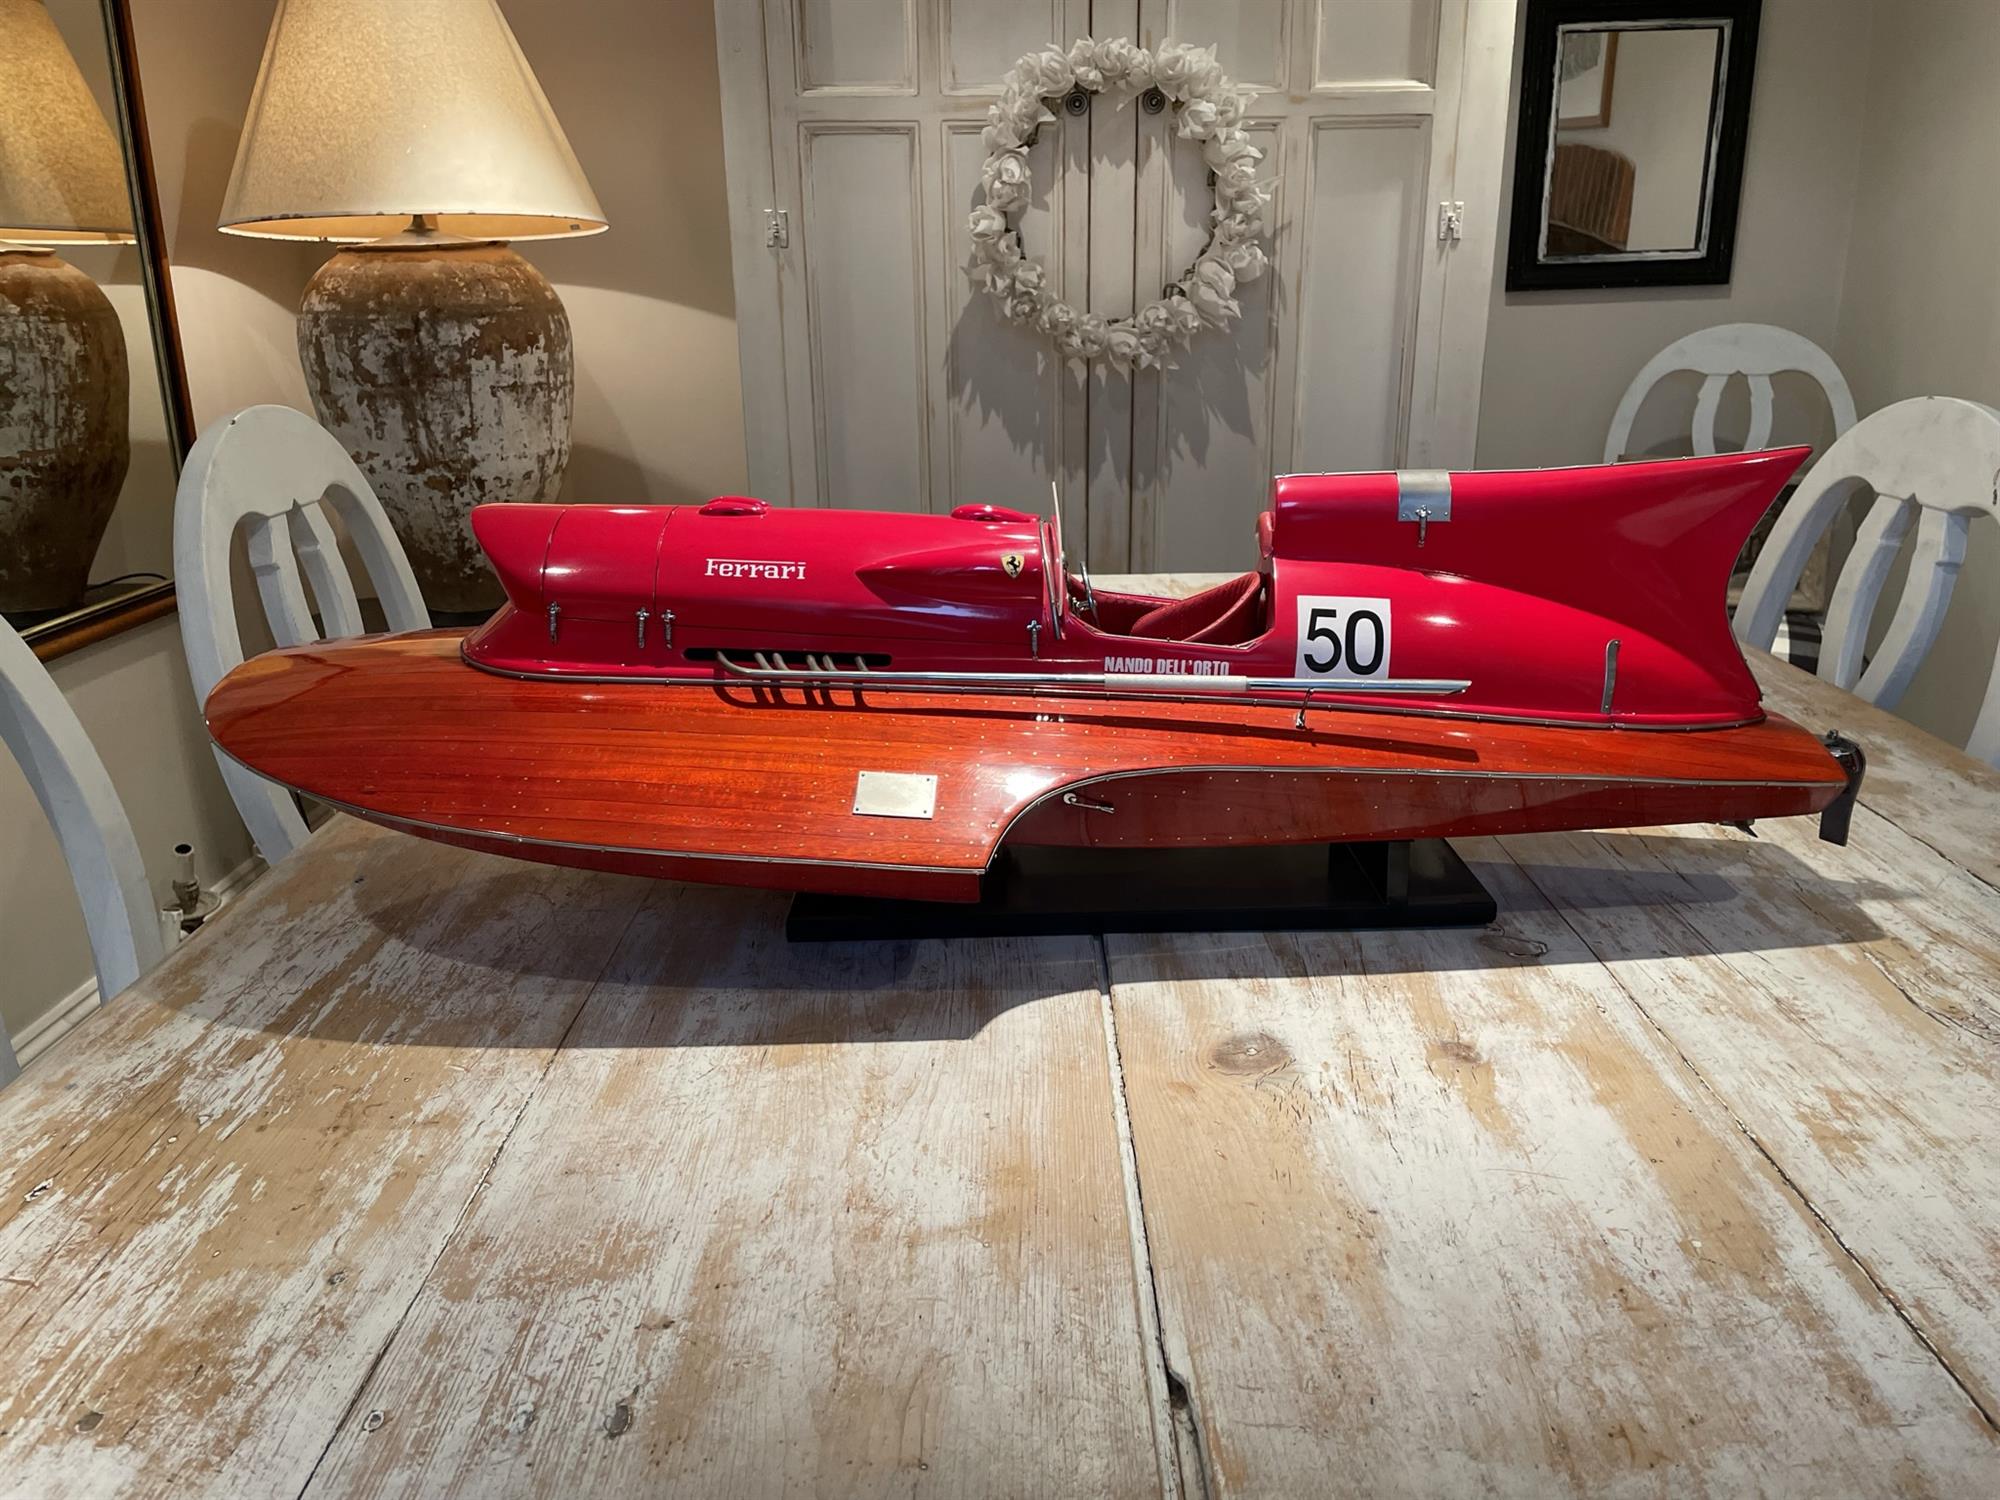 Scale Model of the Ferrari V12-Powered Hydroplane 'Arno XI' - Image 8 of 10